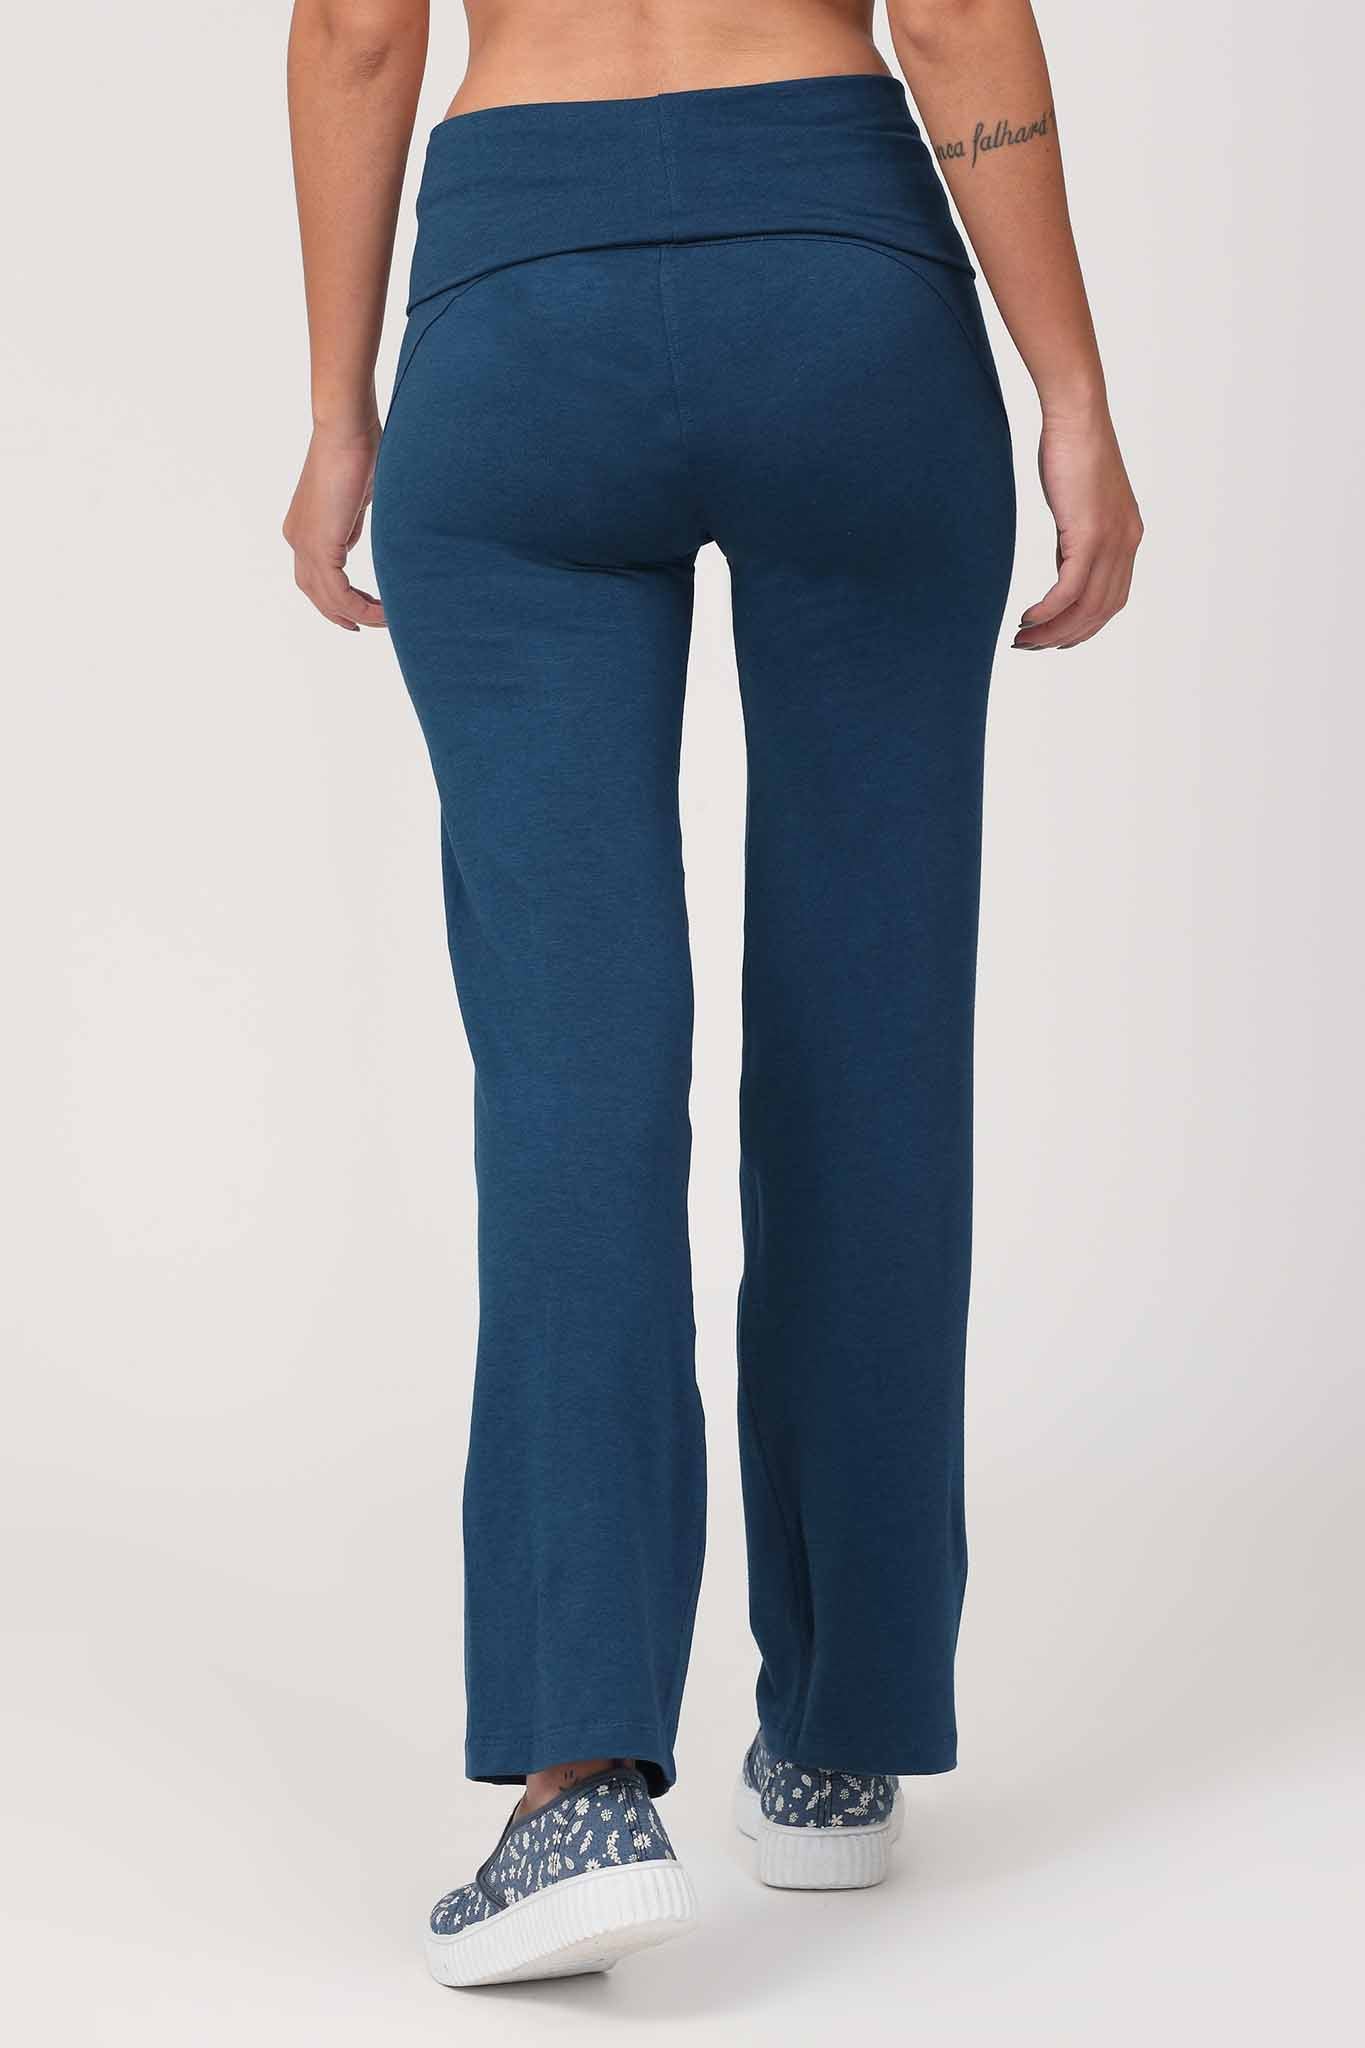 Buy Online Maroon Polyester Cotton Pants for Women  Girls at Best Prices  in Biba IndiaATHLEISU006S